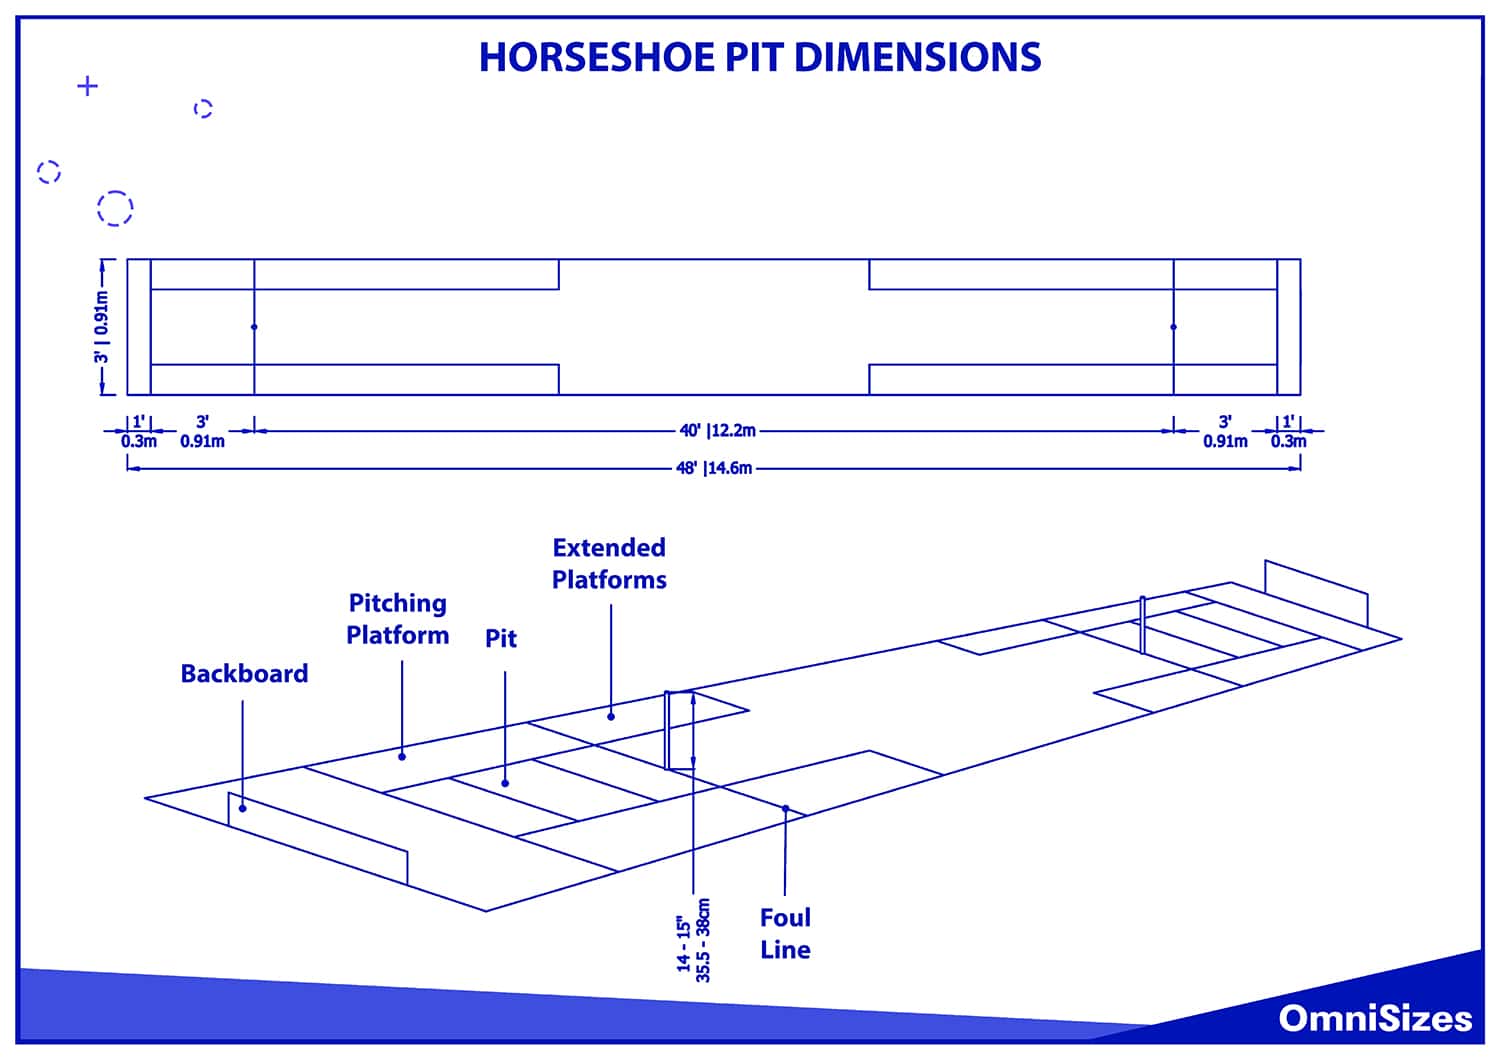 Horseshoe pit dimensions